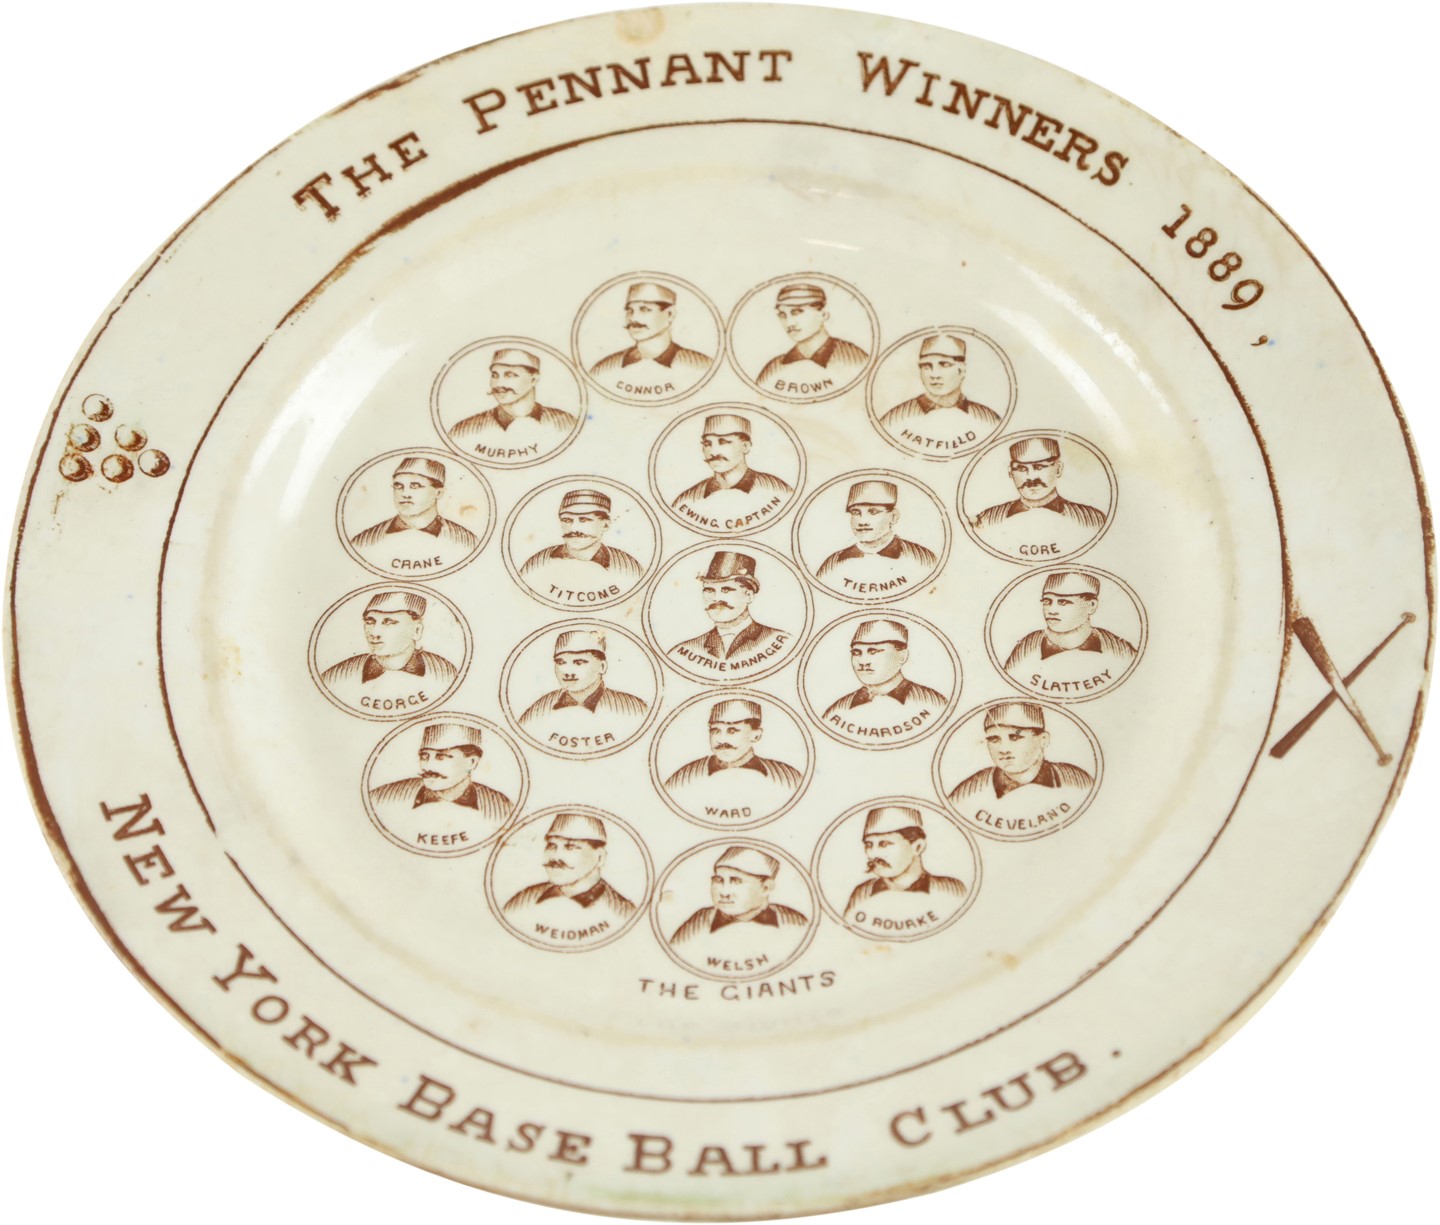 1889 New York Baseball Club Pennant Winners Plate